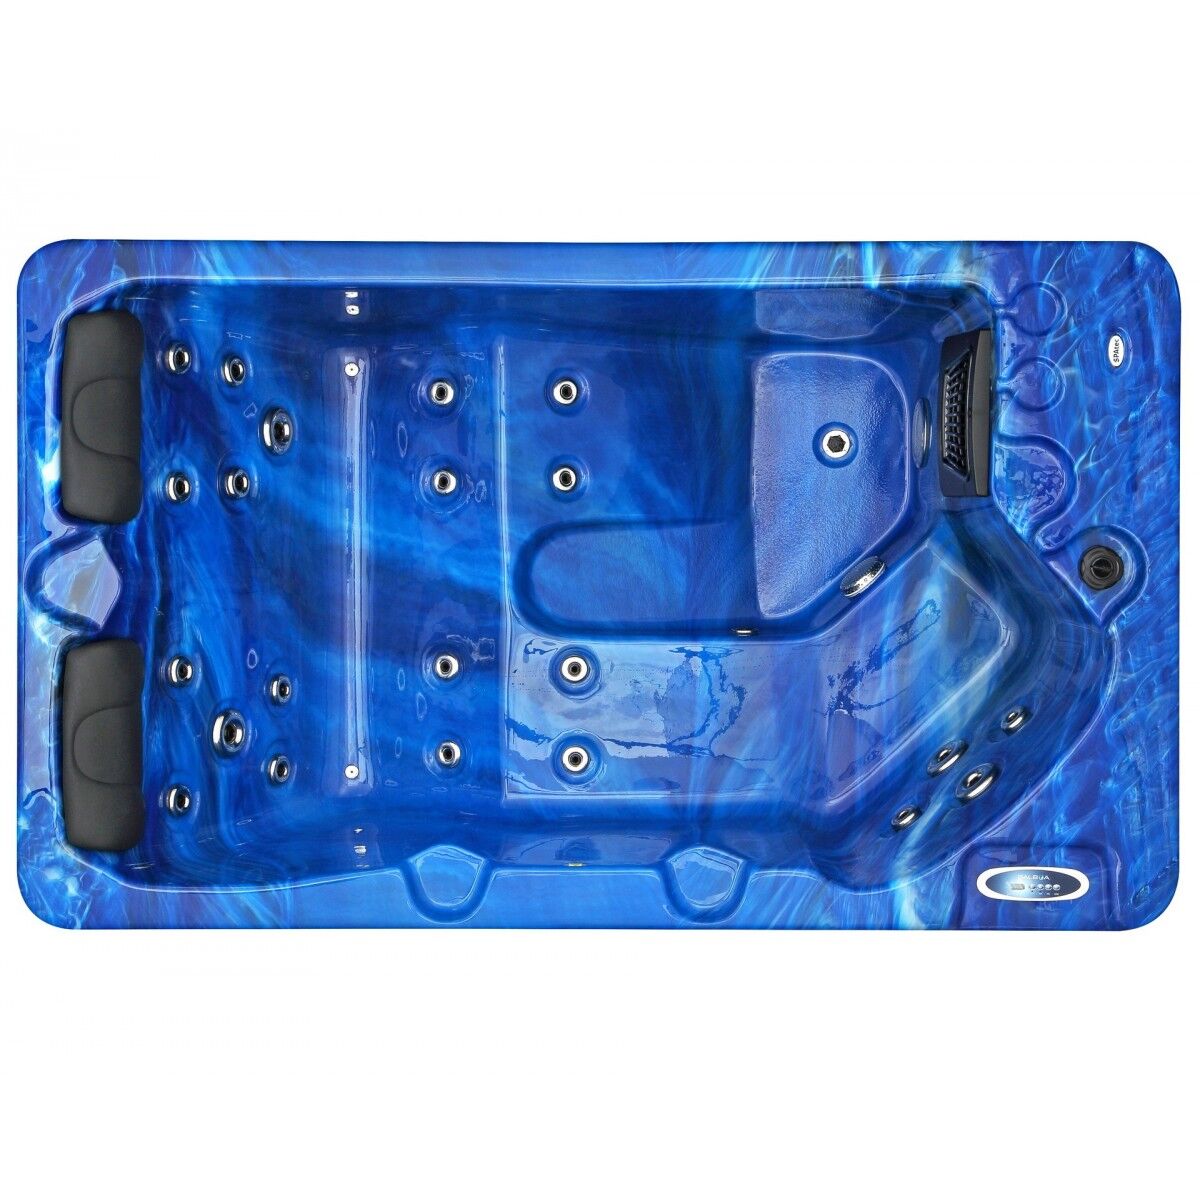 Spatec Jacuzzi Outdoor Whirlpools - SPAtec 300B blau